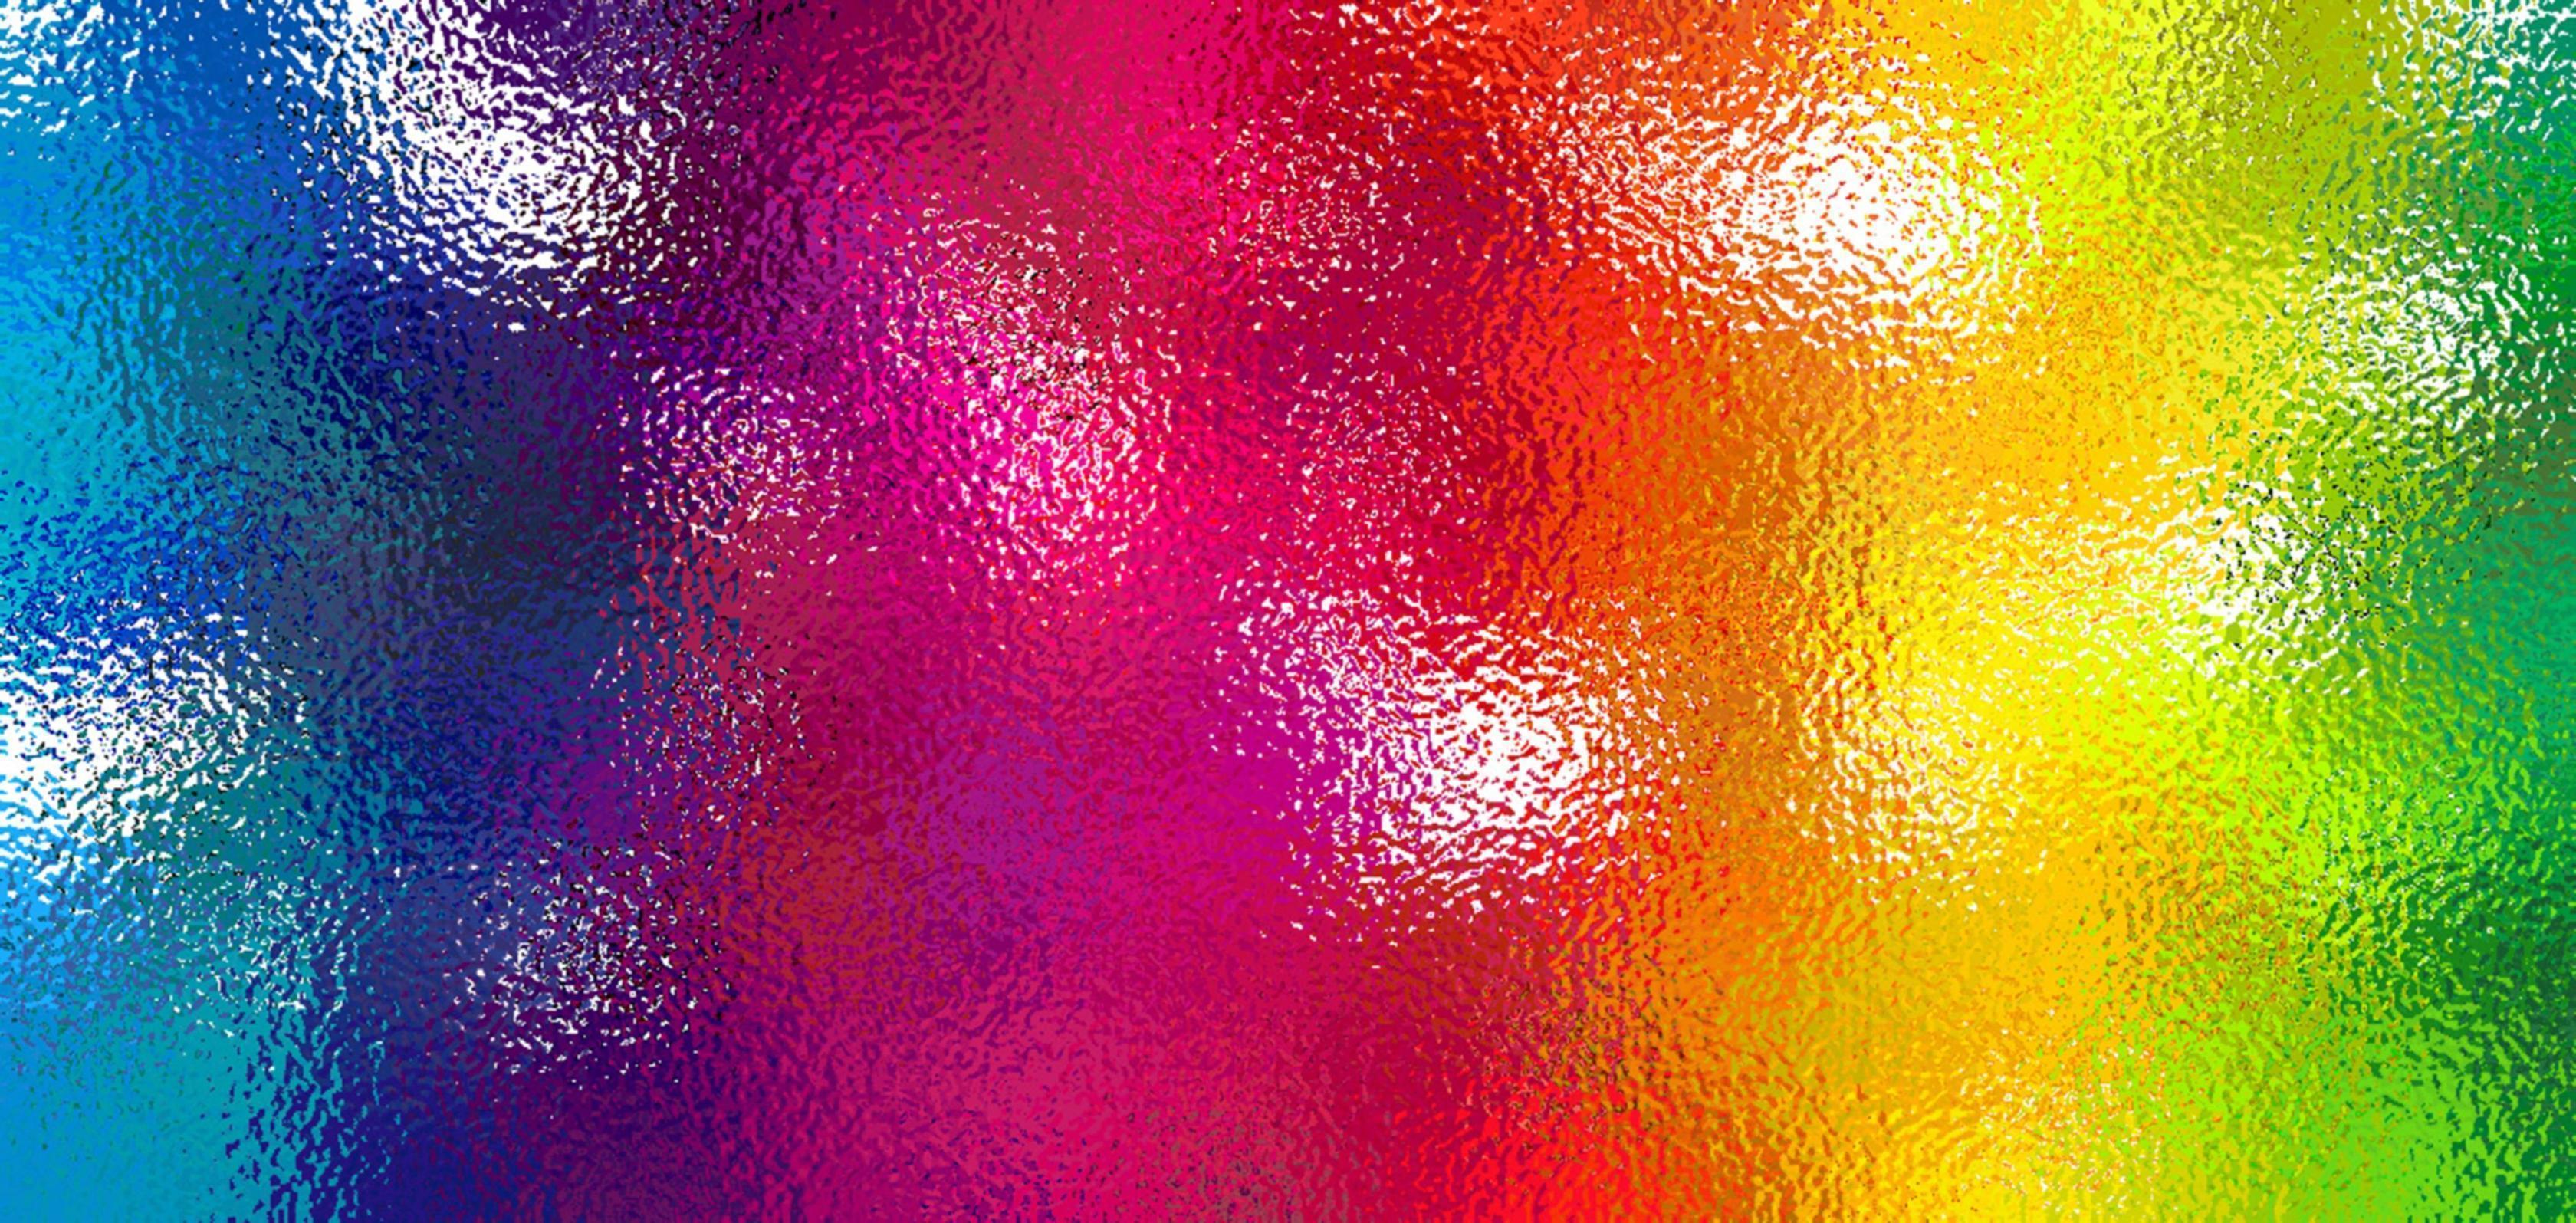 Color Backgrounds Wallpaper Cave HD Wallpapers Download Free Images Wallpaper [wallpaper981.blogspot.com]